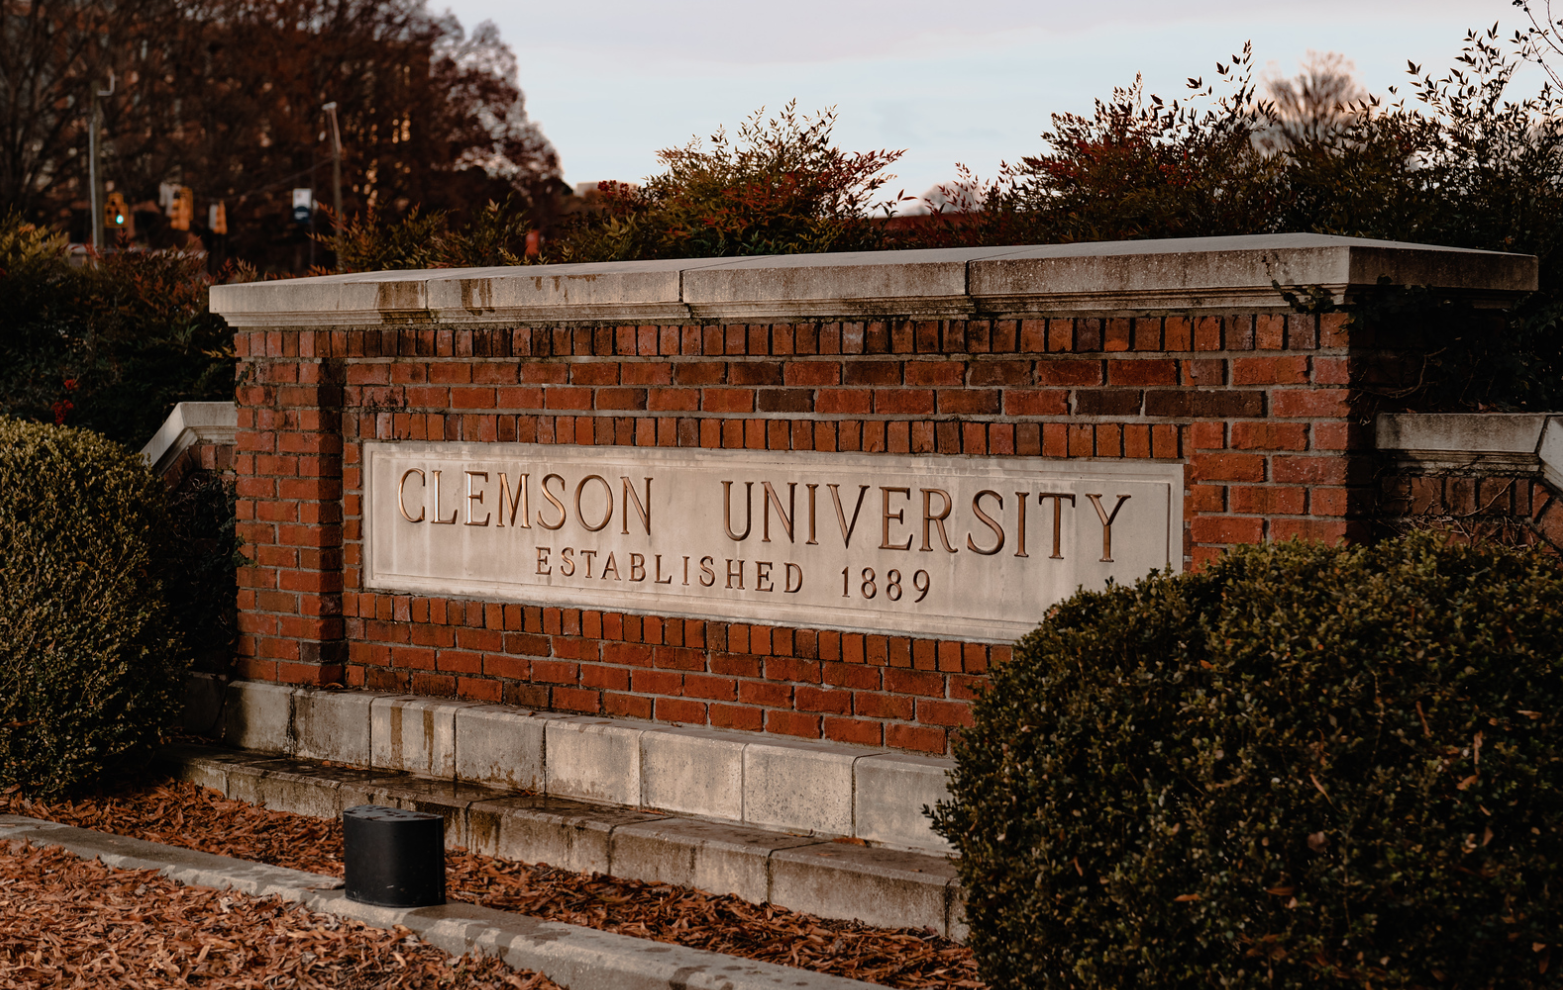 Clemson University brick sign